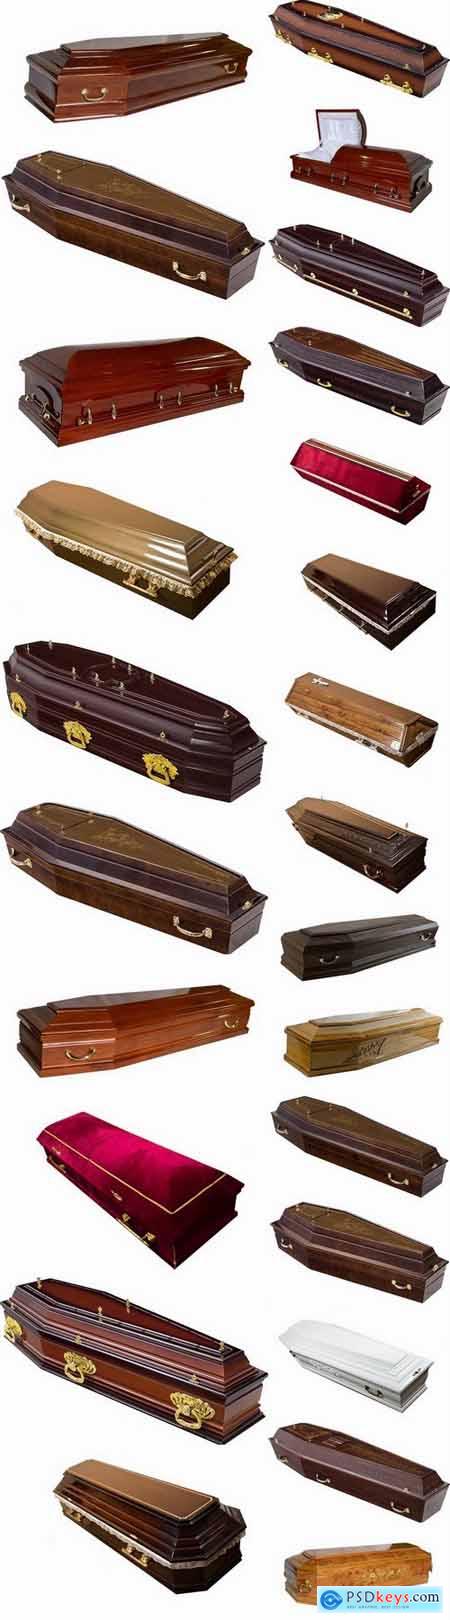 Coffin and precious wood 25 HQ Jpeg